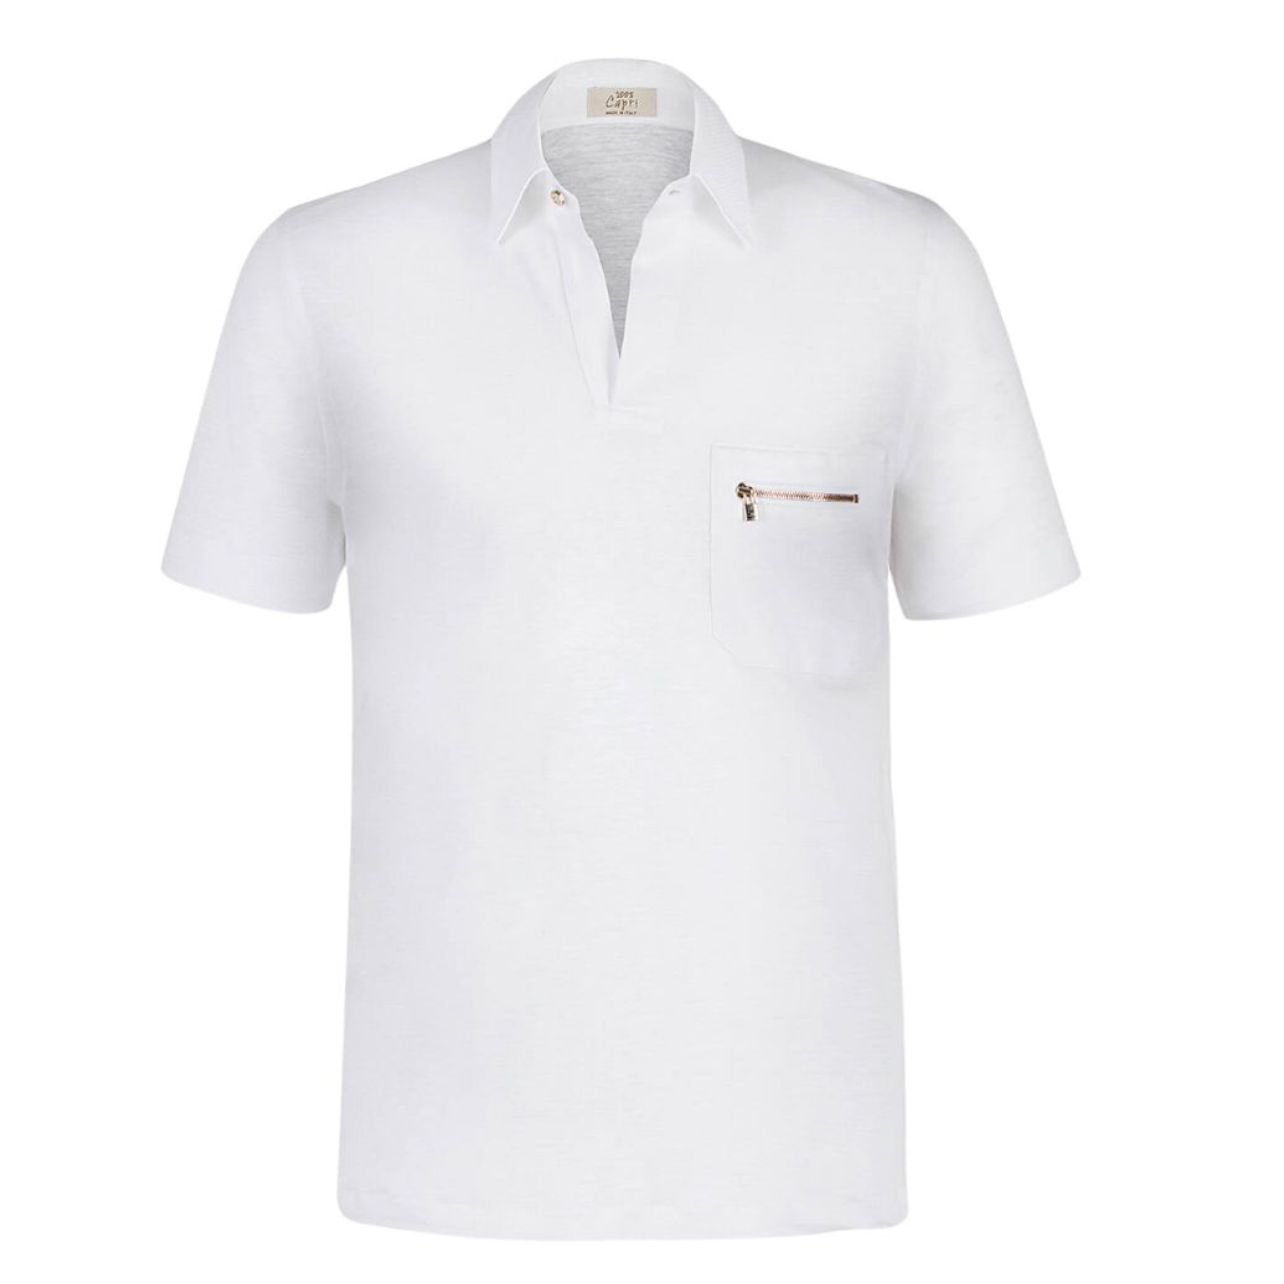 100% Capri white polo shirt with zipper detailing